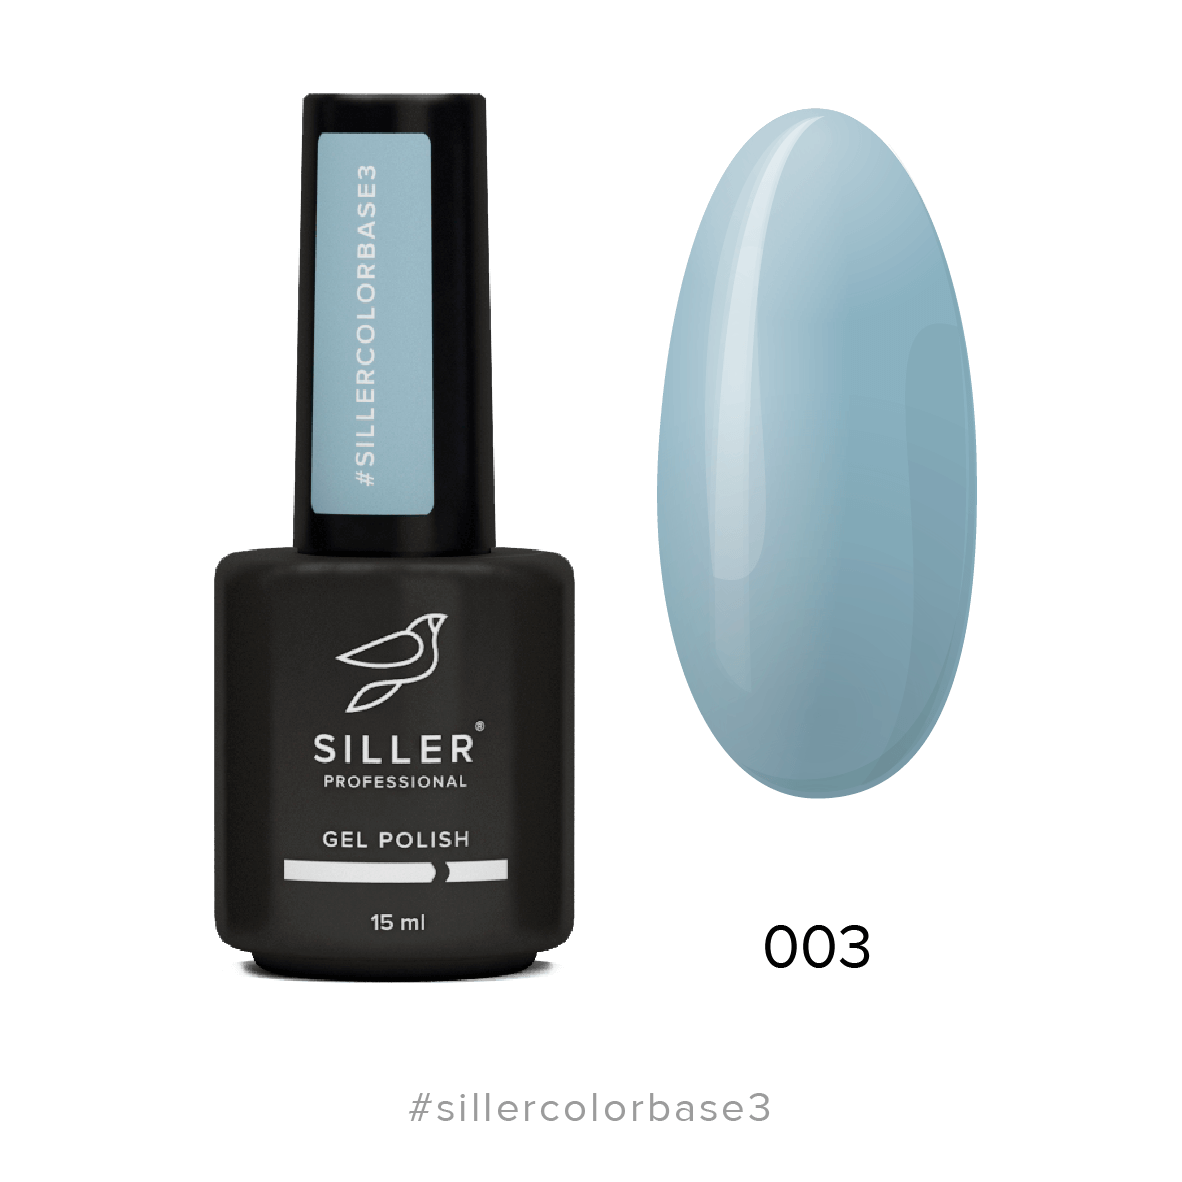 Siller Colored Rubber Base #3 - Blue